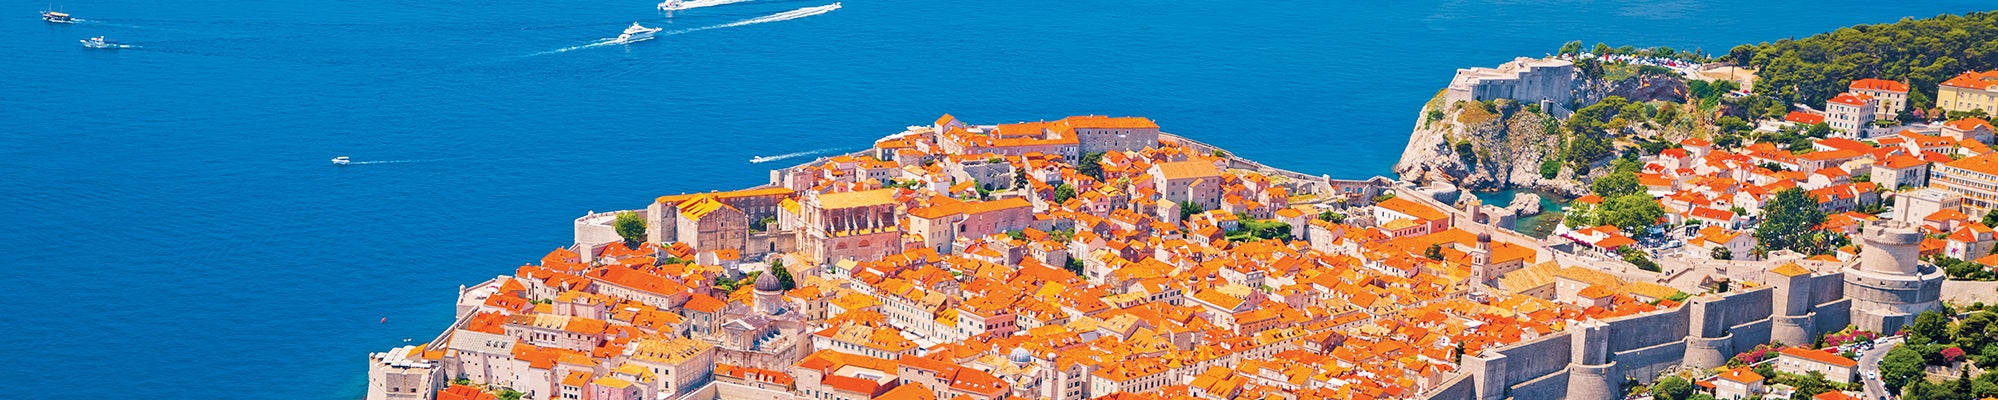 Slovenia Coast Dubrovnik